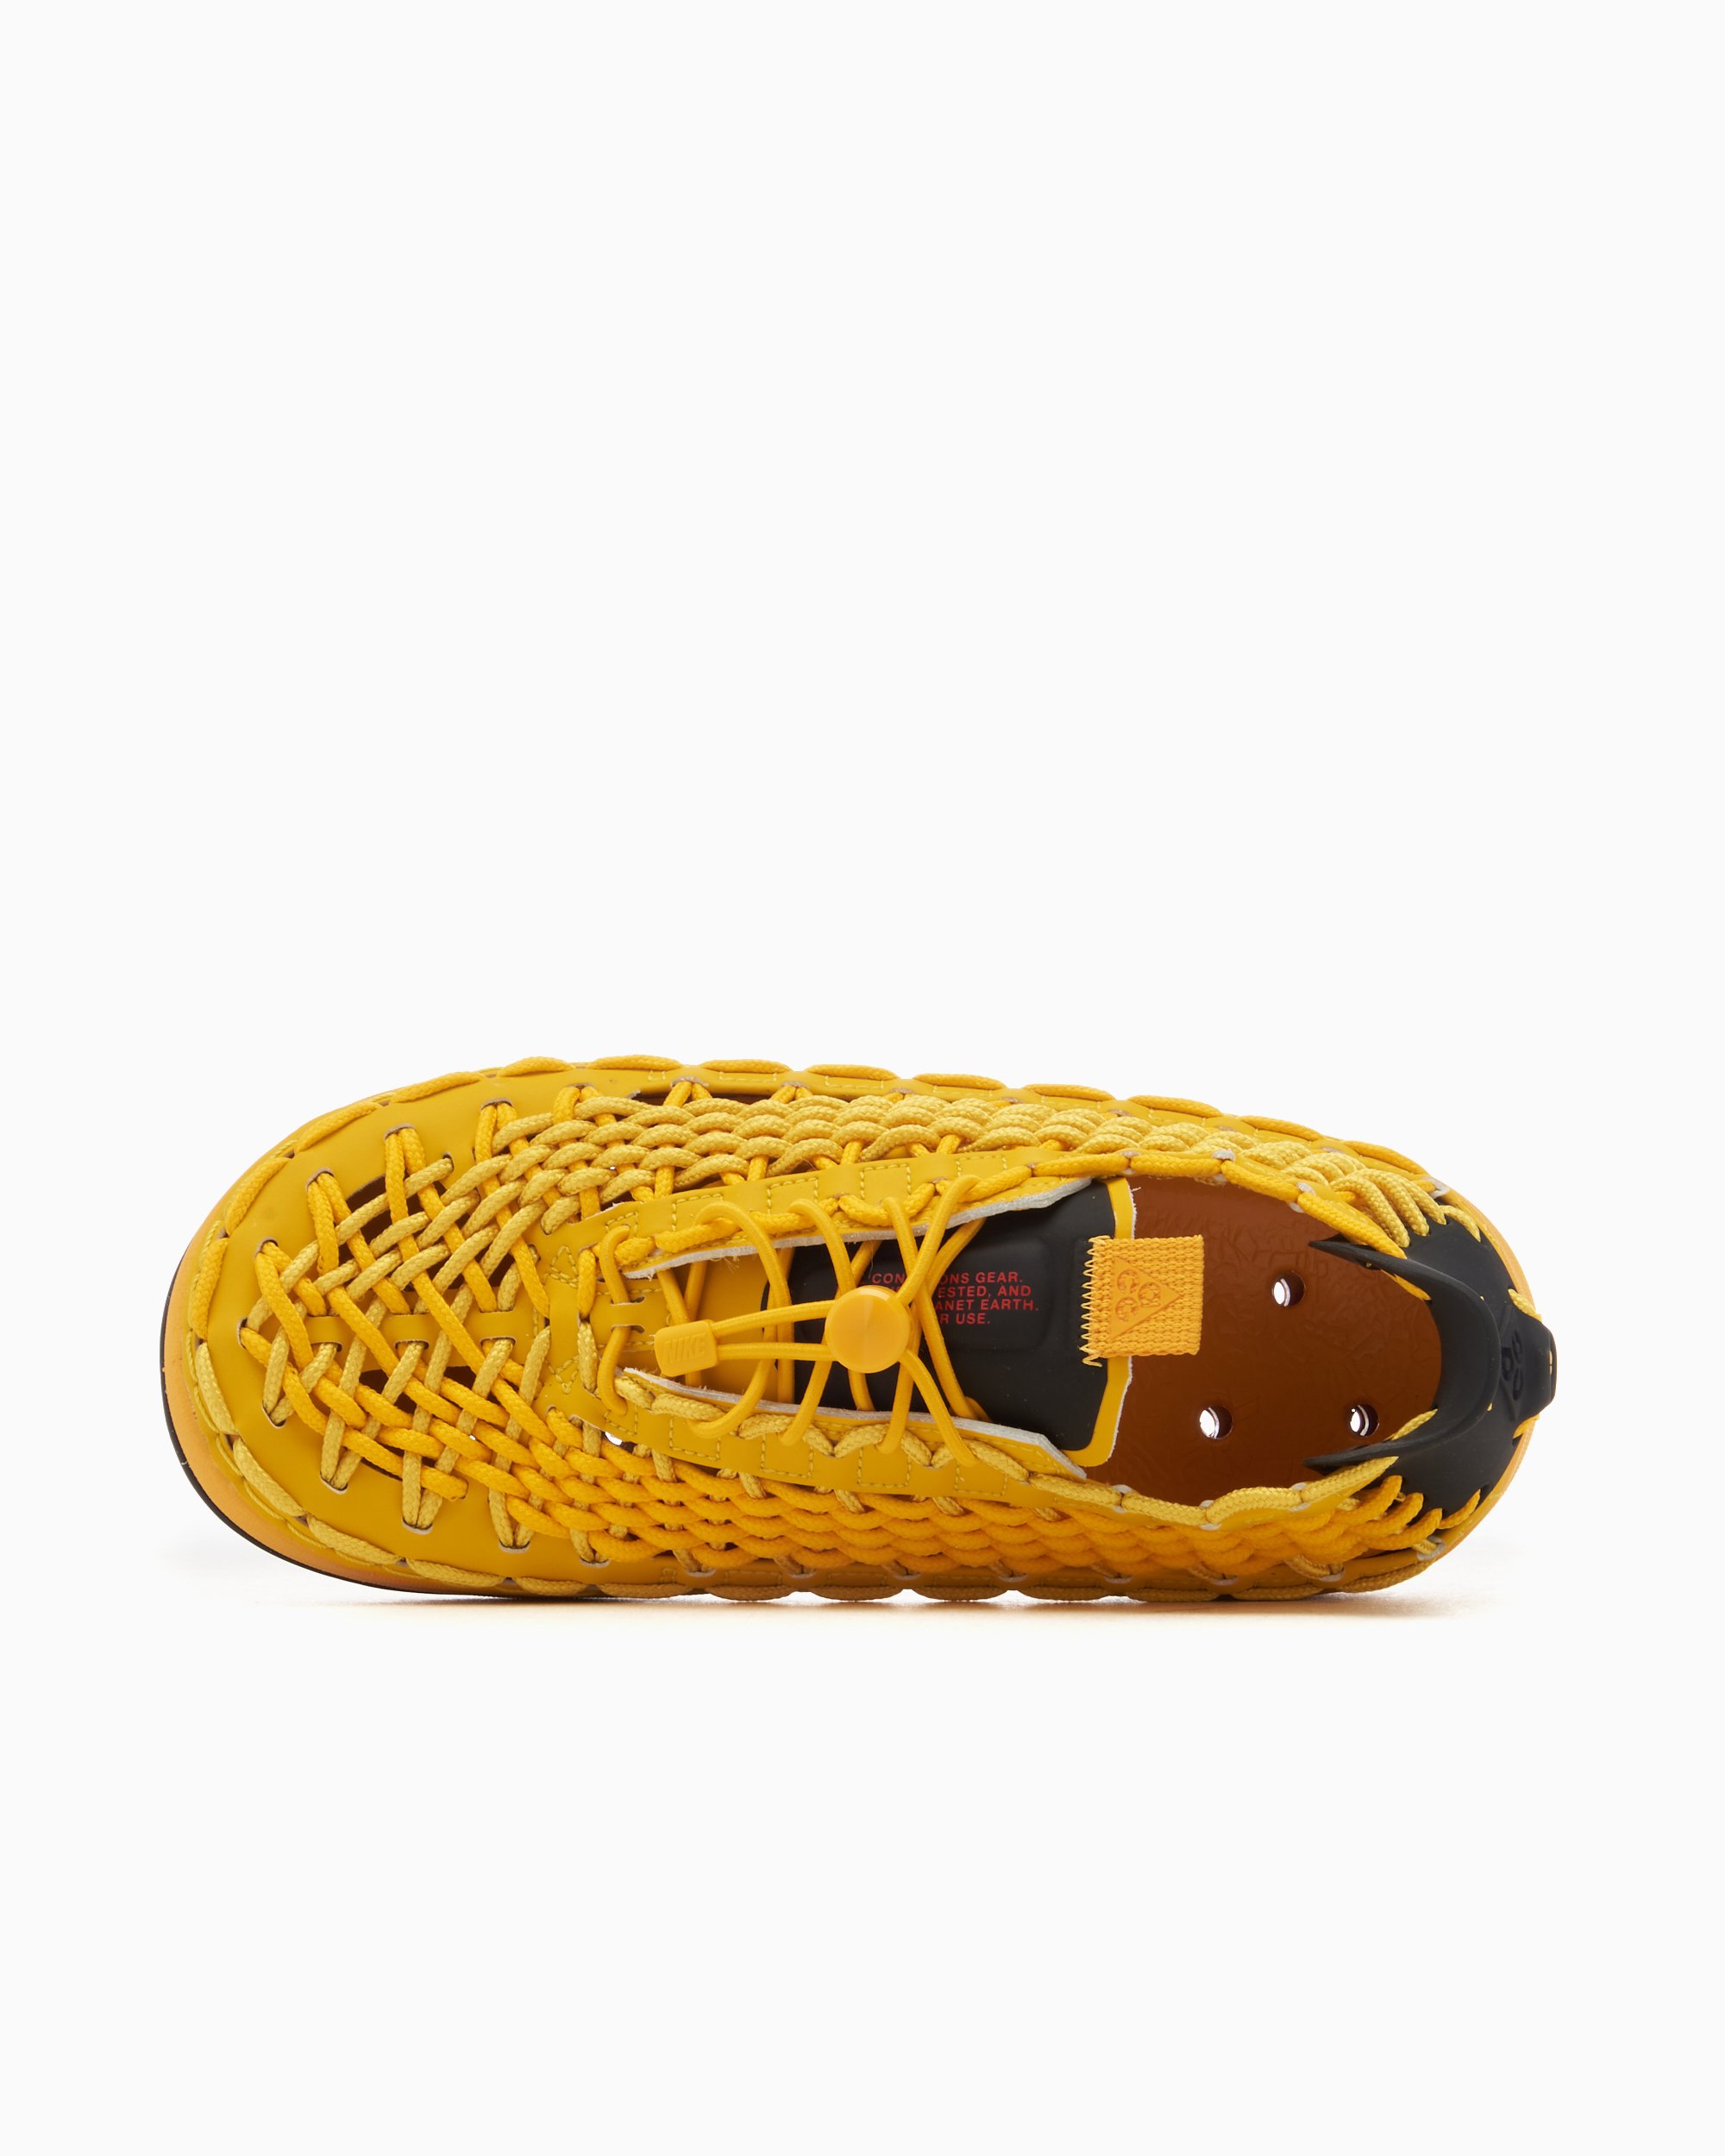 Nike ACG Watercat+ Yellow CZ0931-700| FOOTDISTRICT